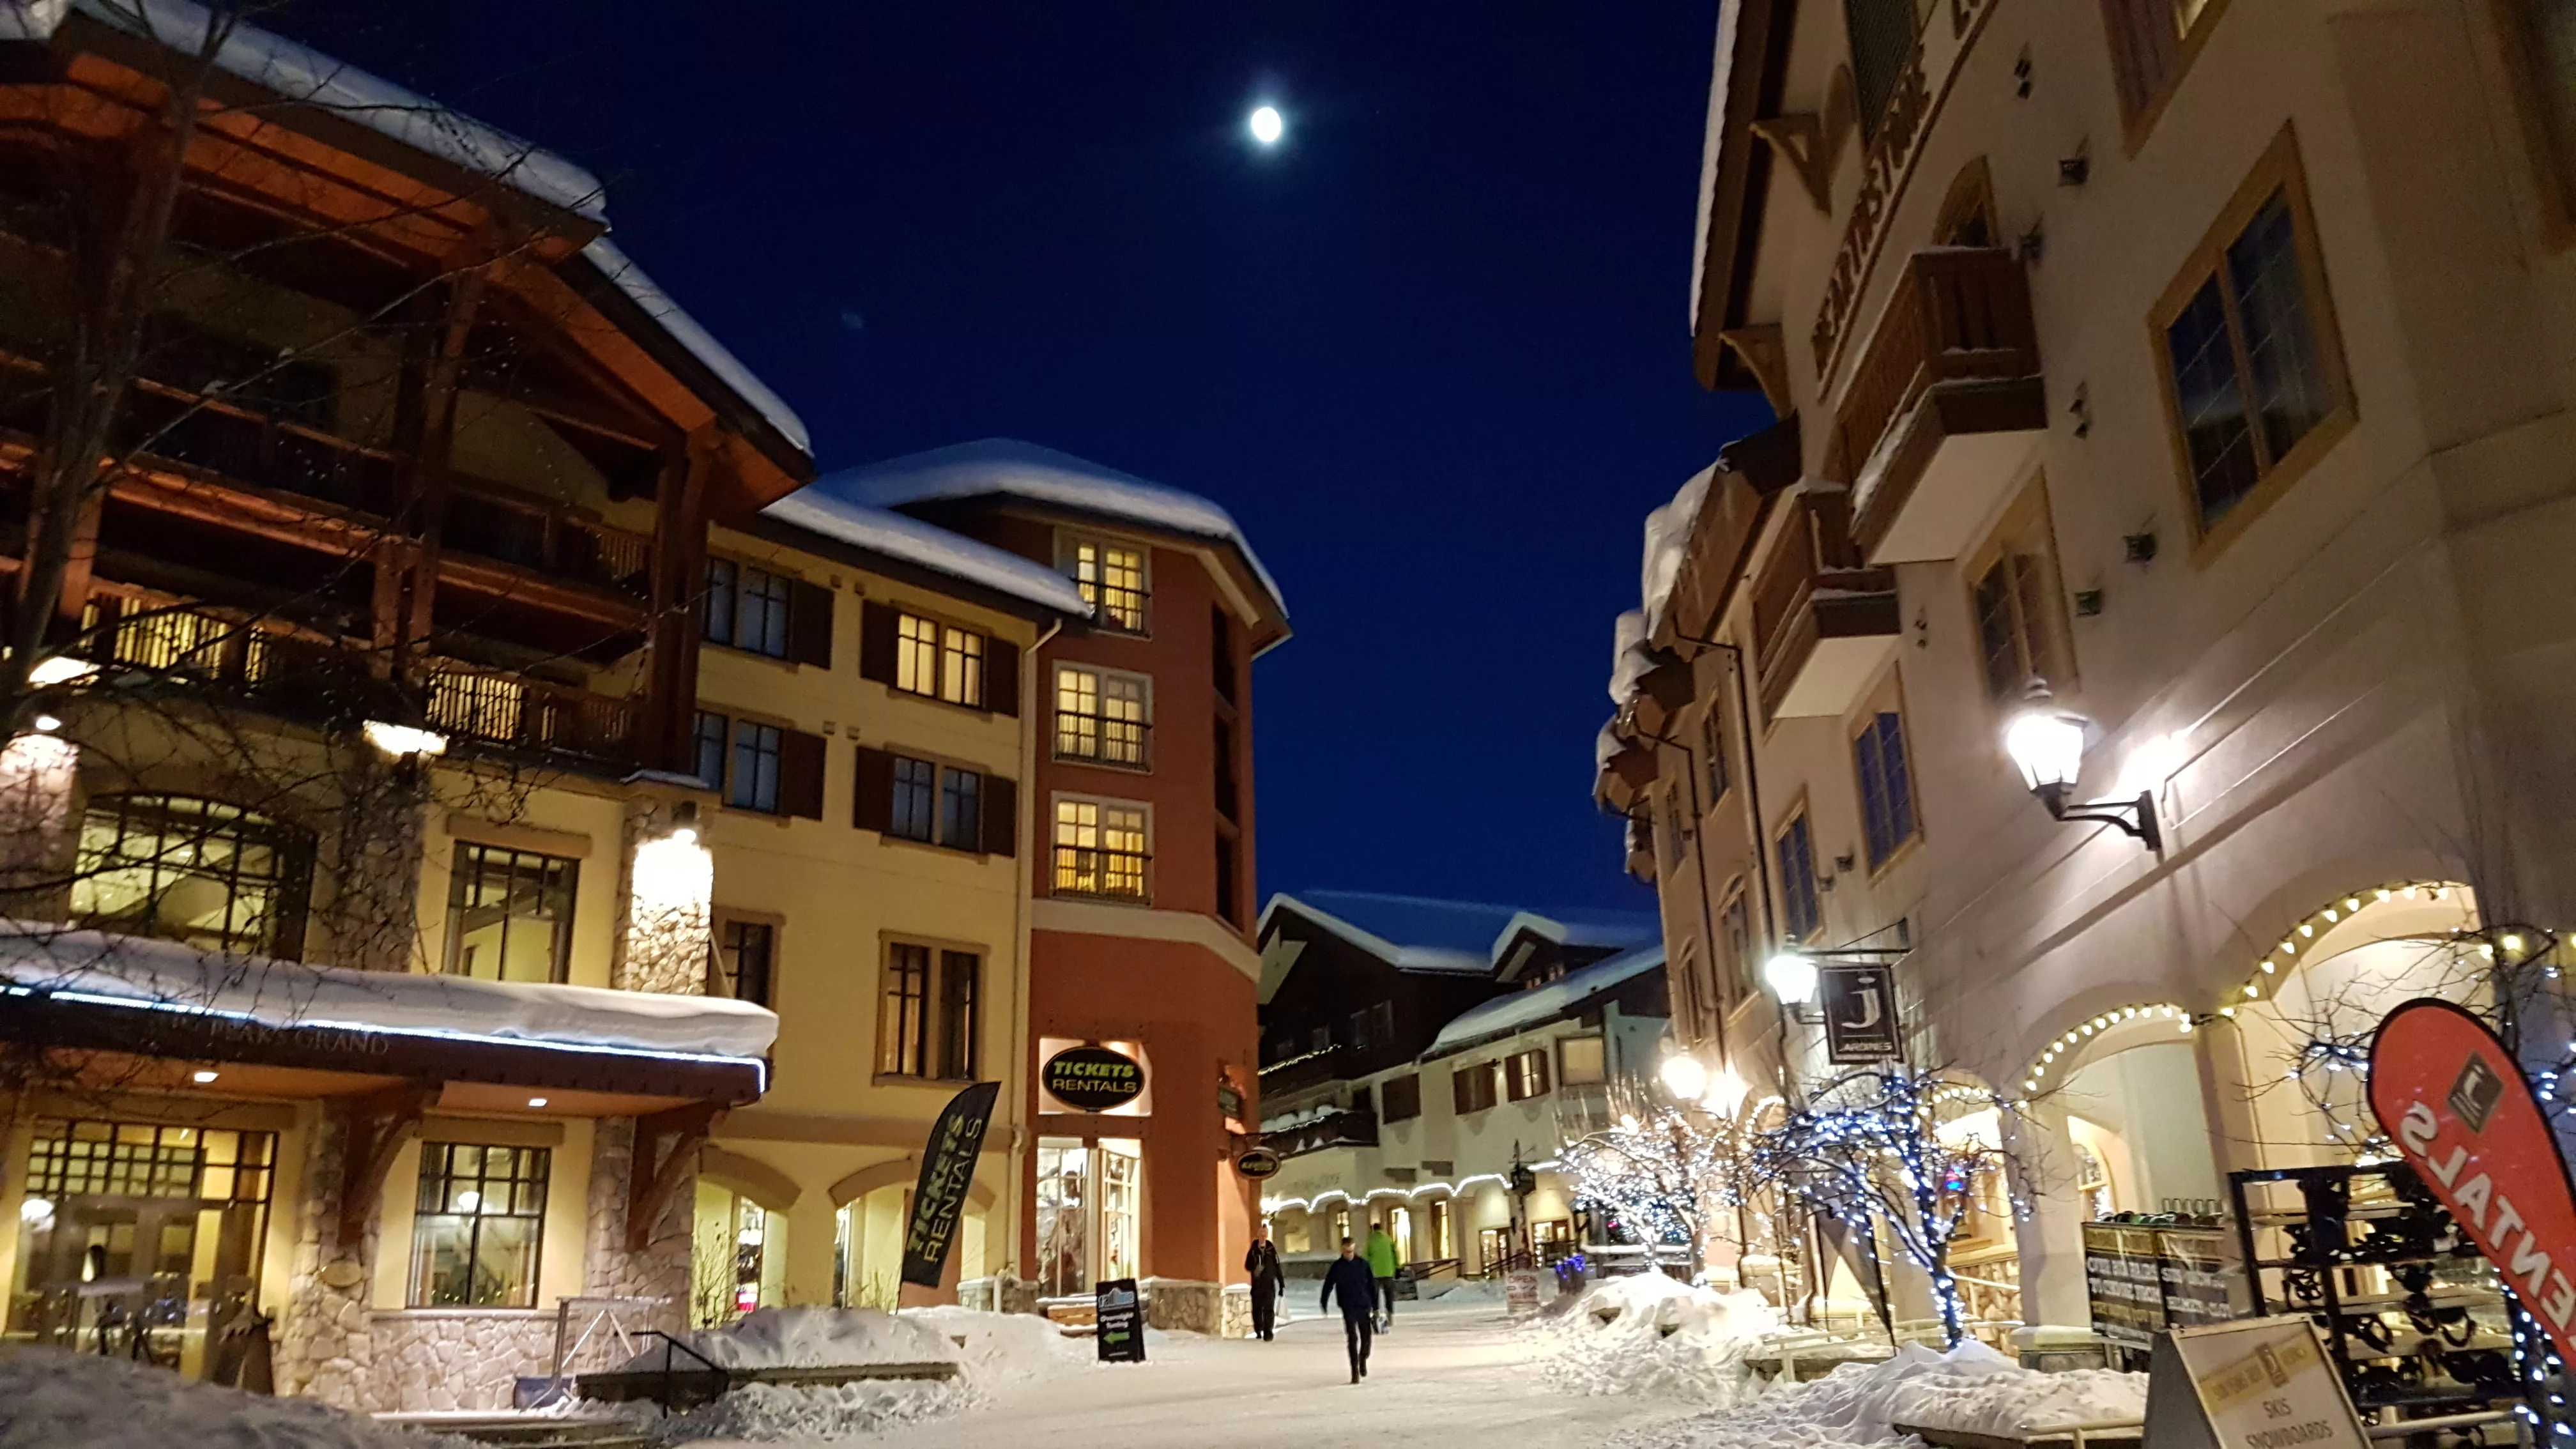 Sun Peaks Ski Resort in Canada, North America | Snowboarding,Skiing - Rated 4.3